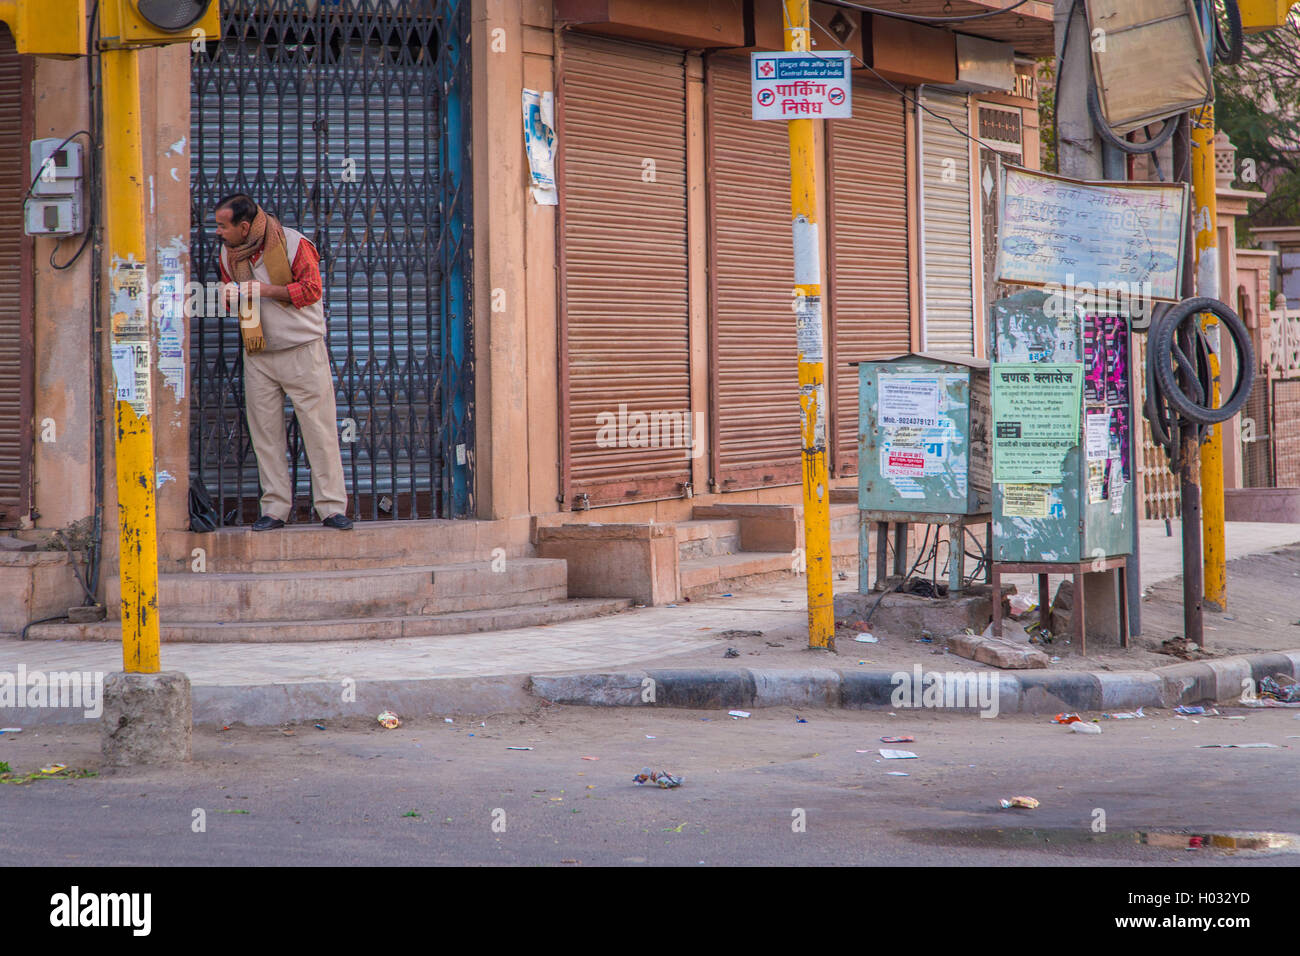 JODHPUR, INDIA - 12 FEBRUARY 2015: Man stands in doorway of building in empty street and looks around the corner. Stock Photo